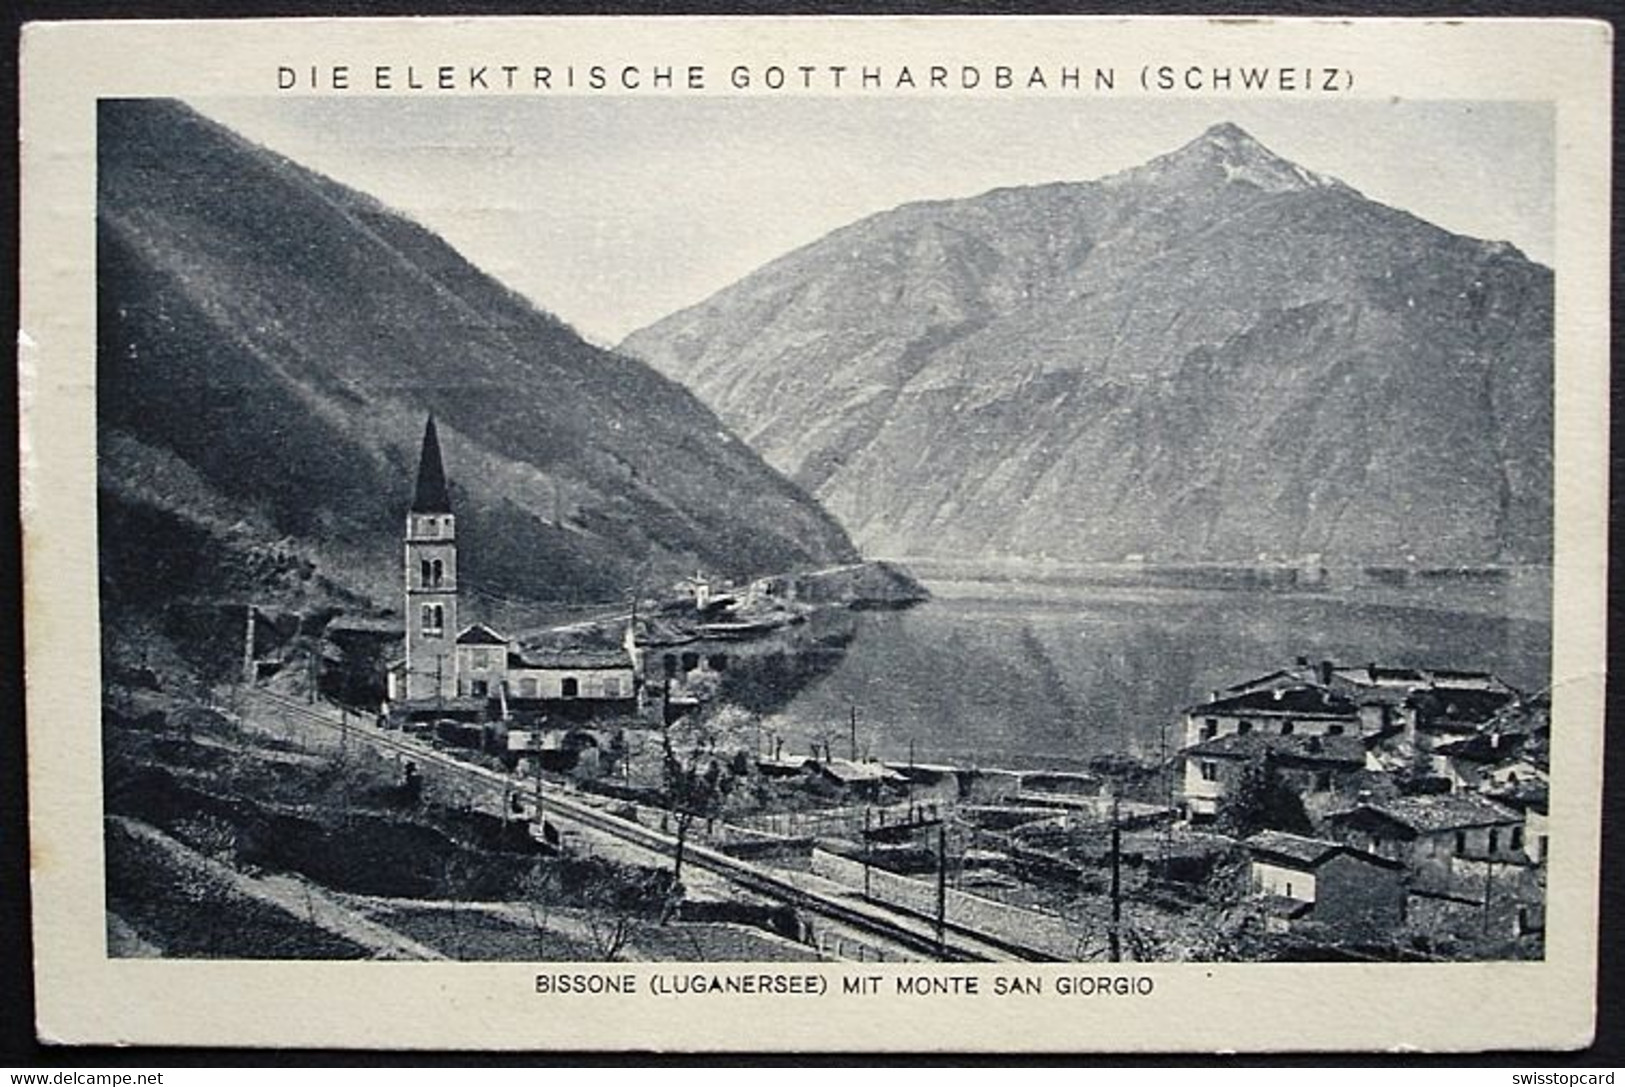 BISSONE (Luganersee) & Monte San Giorgio Gotthard-Bahn - Bissone